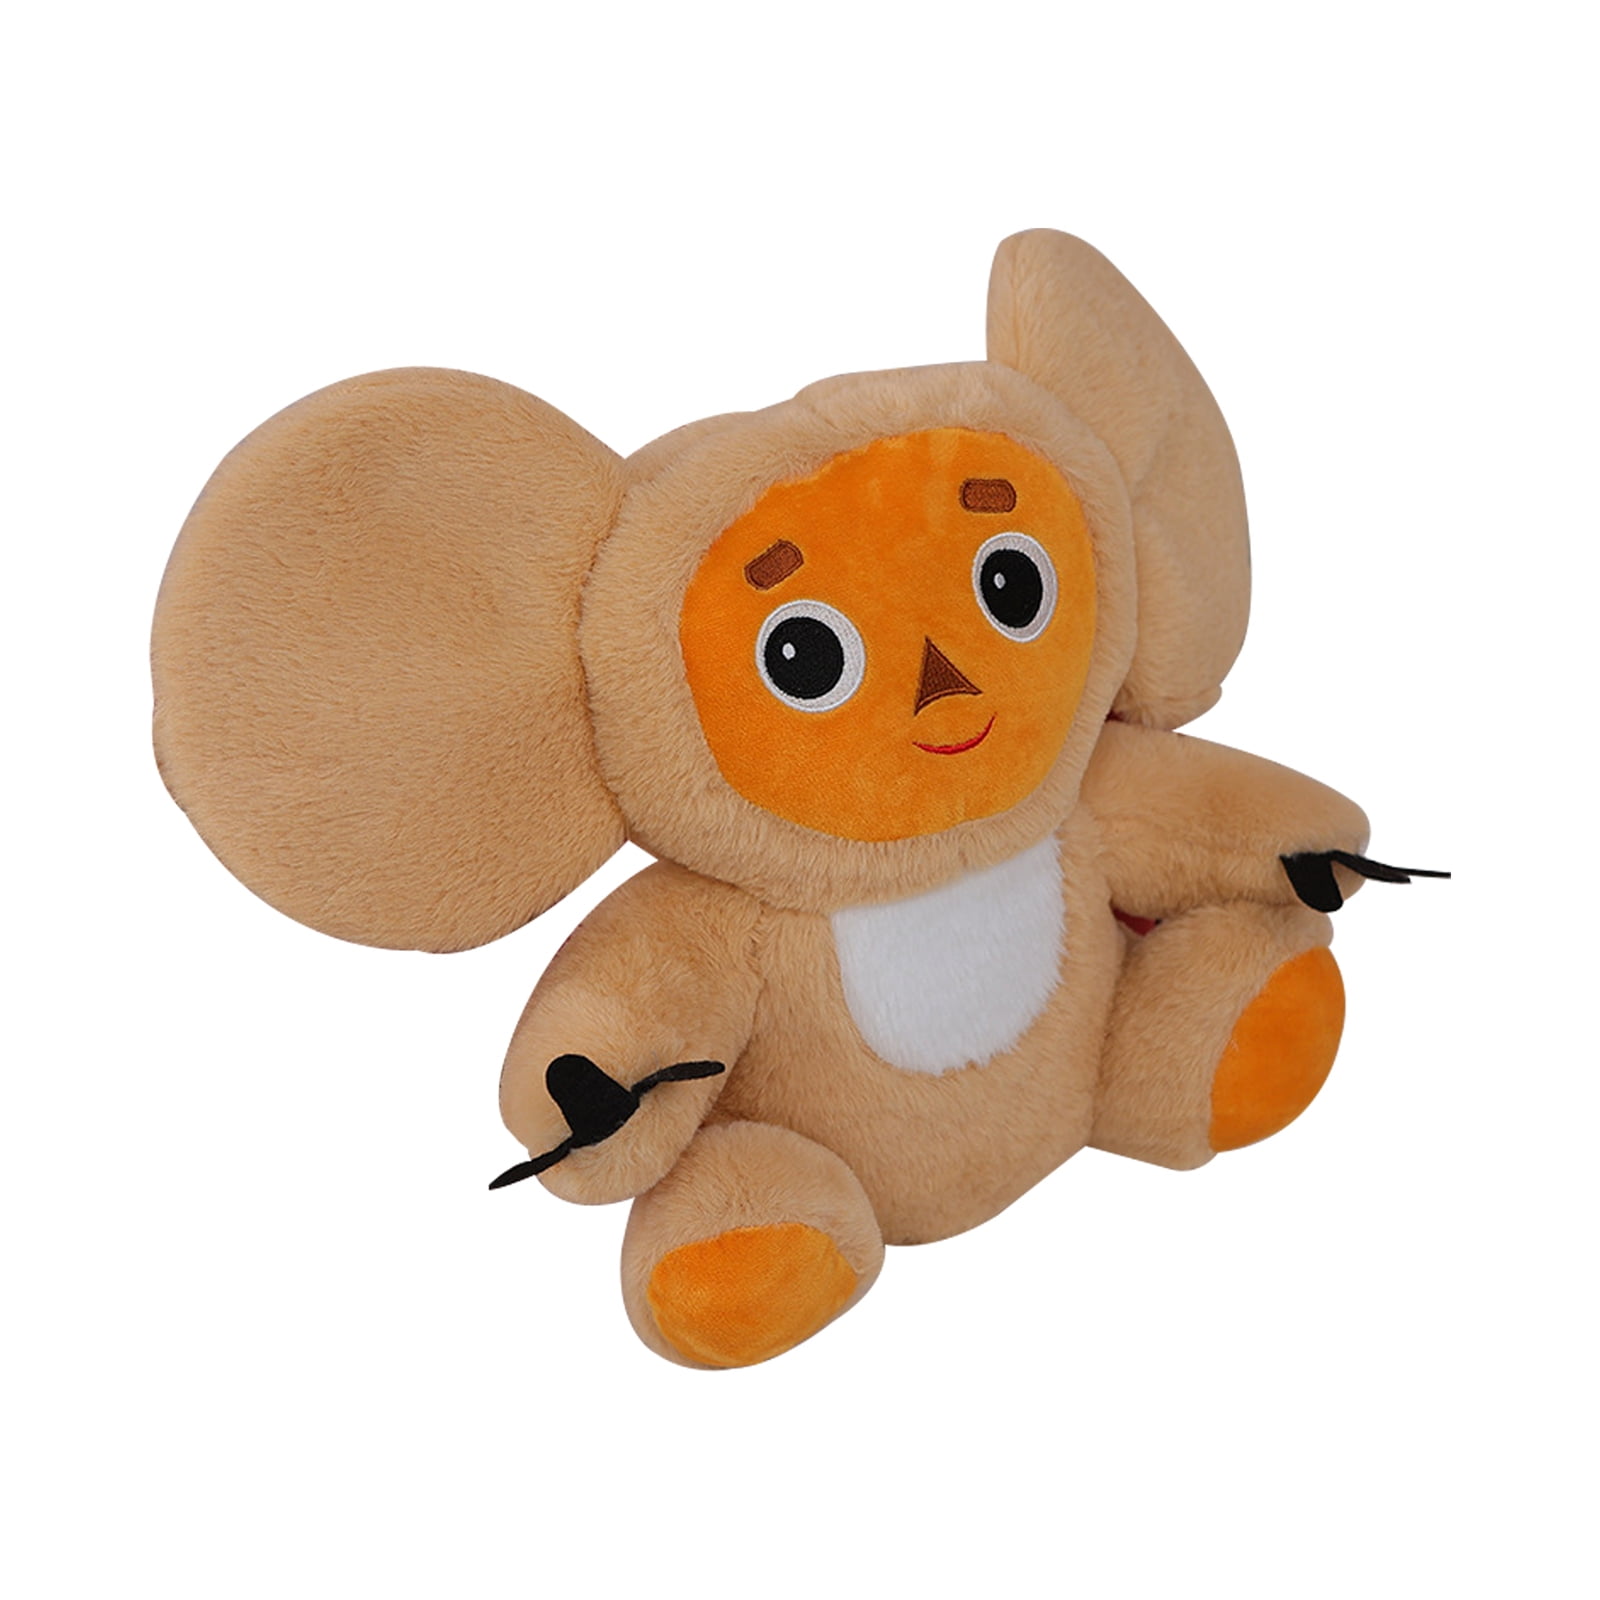 Cheburashka Monkey Plush Doll Popular Russian Cartoon Movie Characters Soft  Stuffed Figure Doll Toy for Kids and Adults Fans